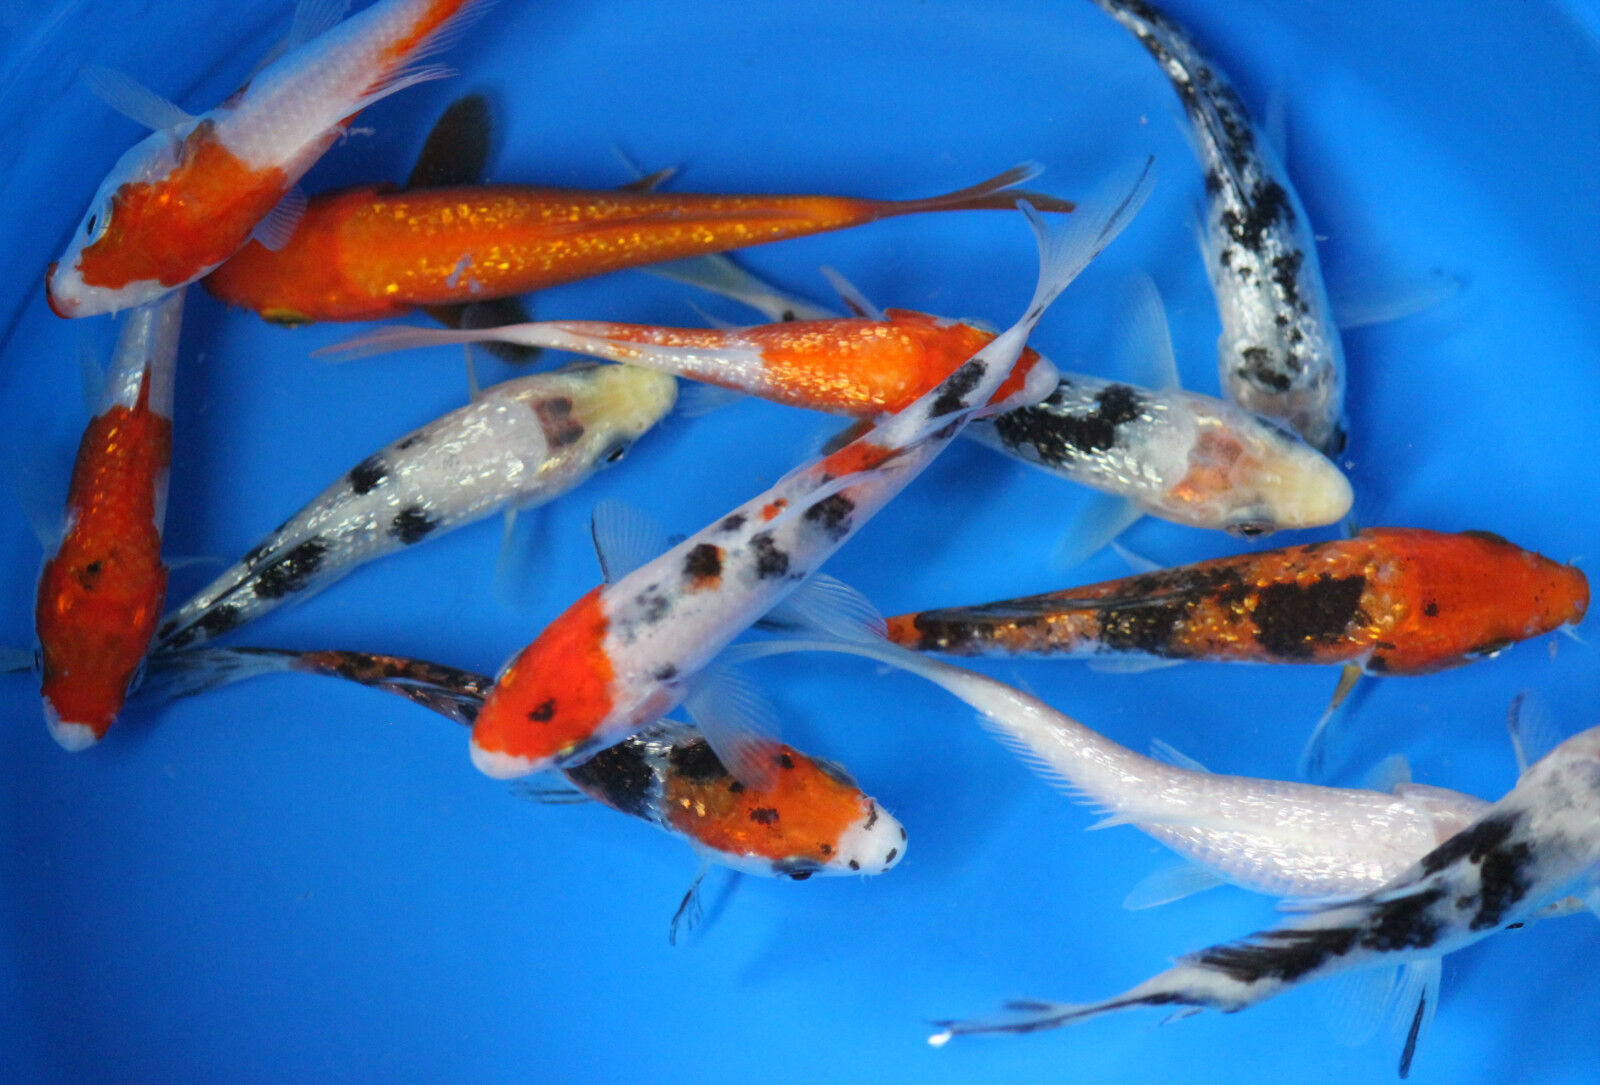 100 pack of 3 inch Koi Live fish tank koi pond aquarium wholesale 